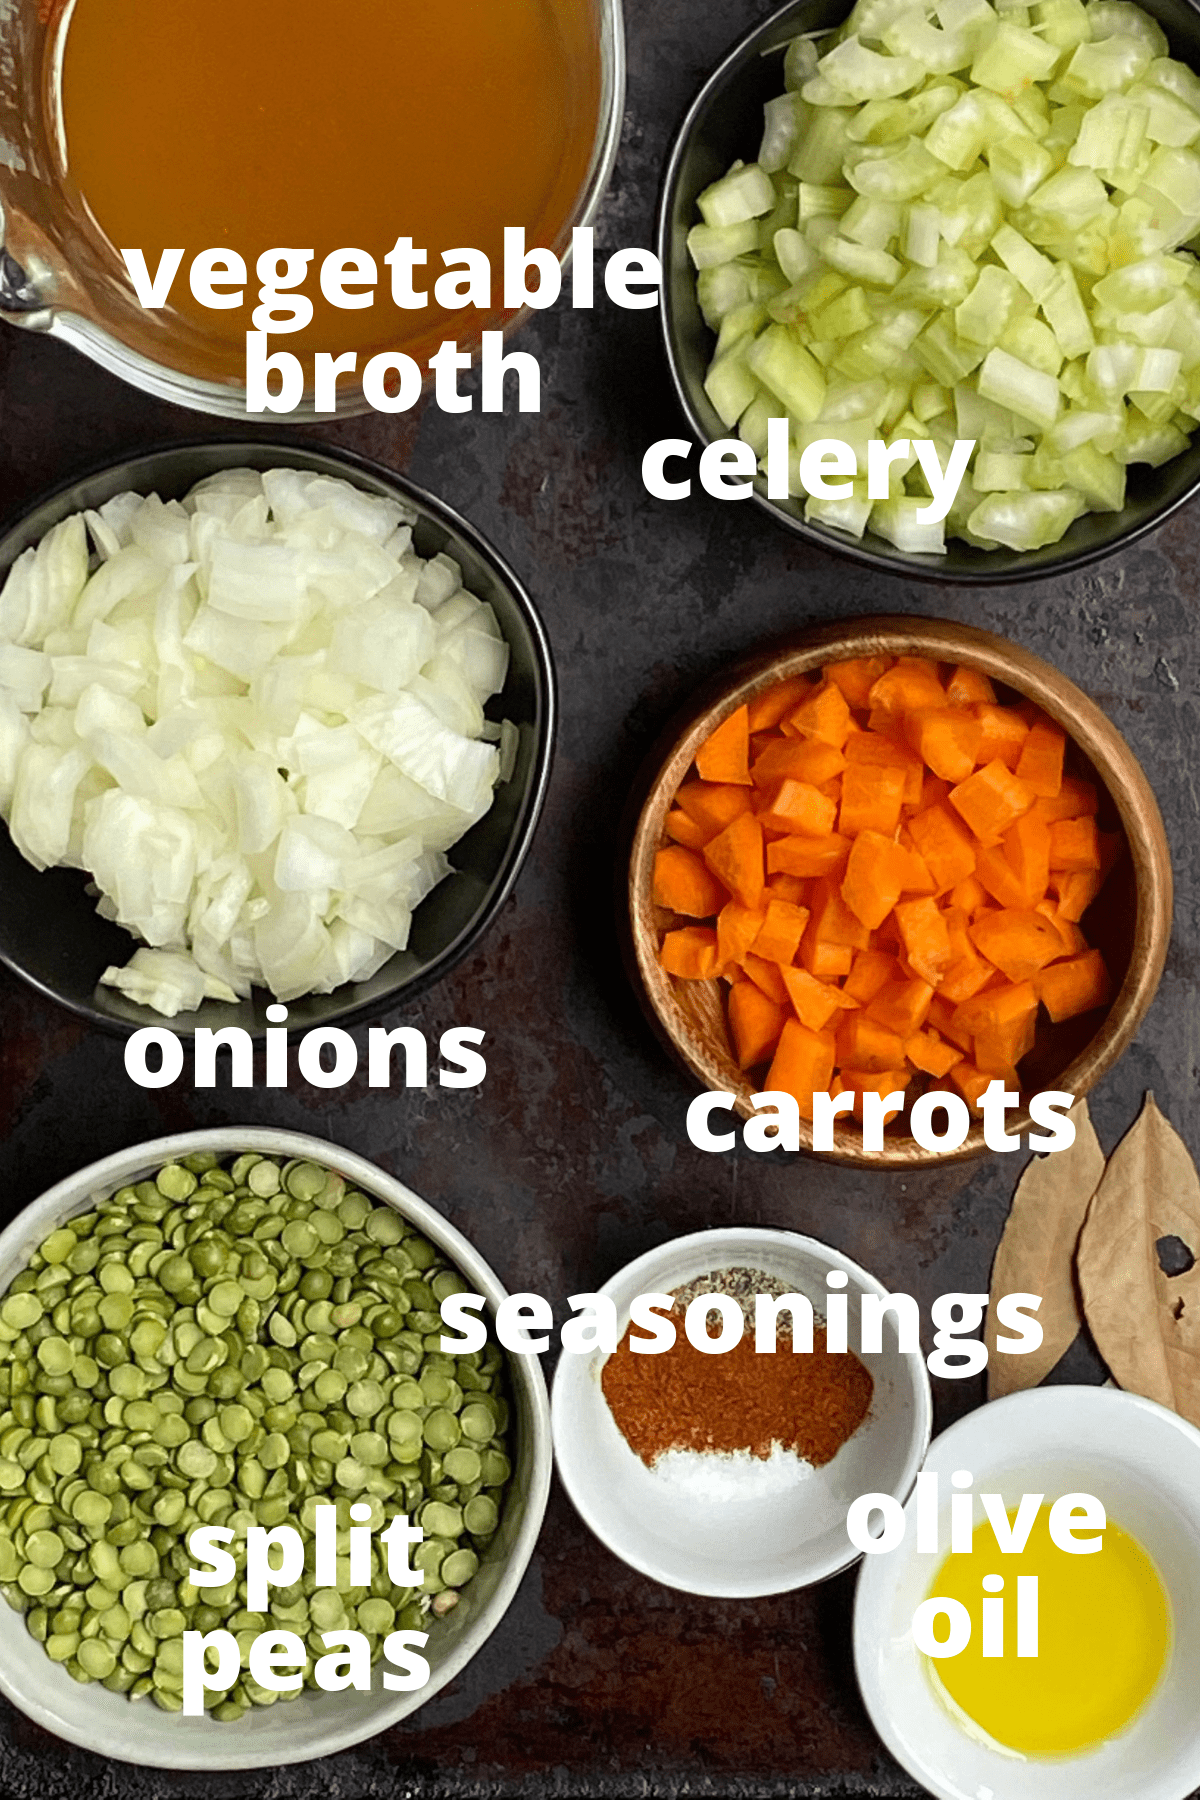 An overhead view of the ingredients to make vegan split pea soup; vegtable broth, celery, onions, carrots, seasonings, split peas, and olive oil